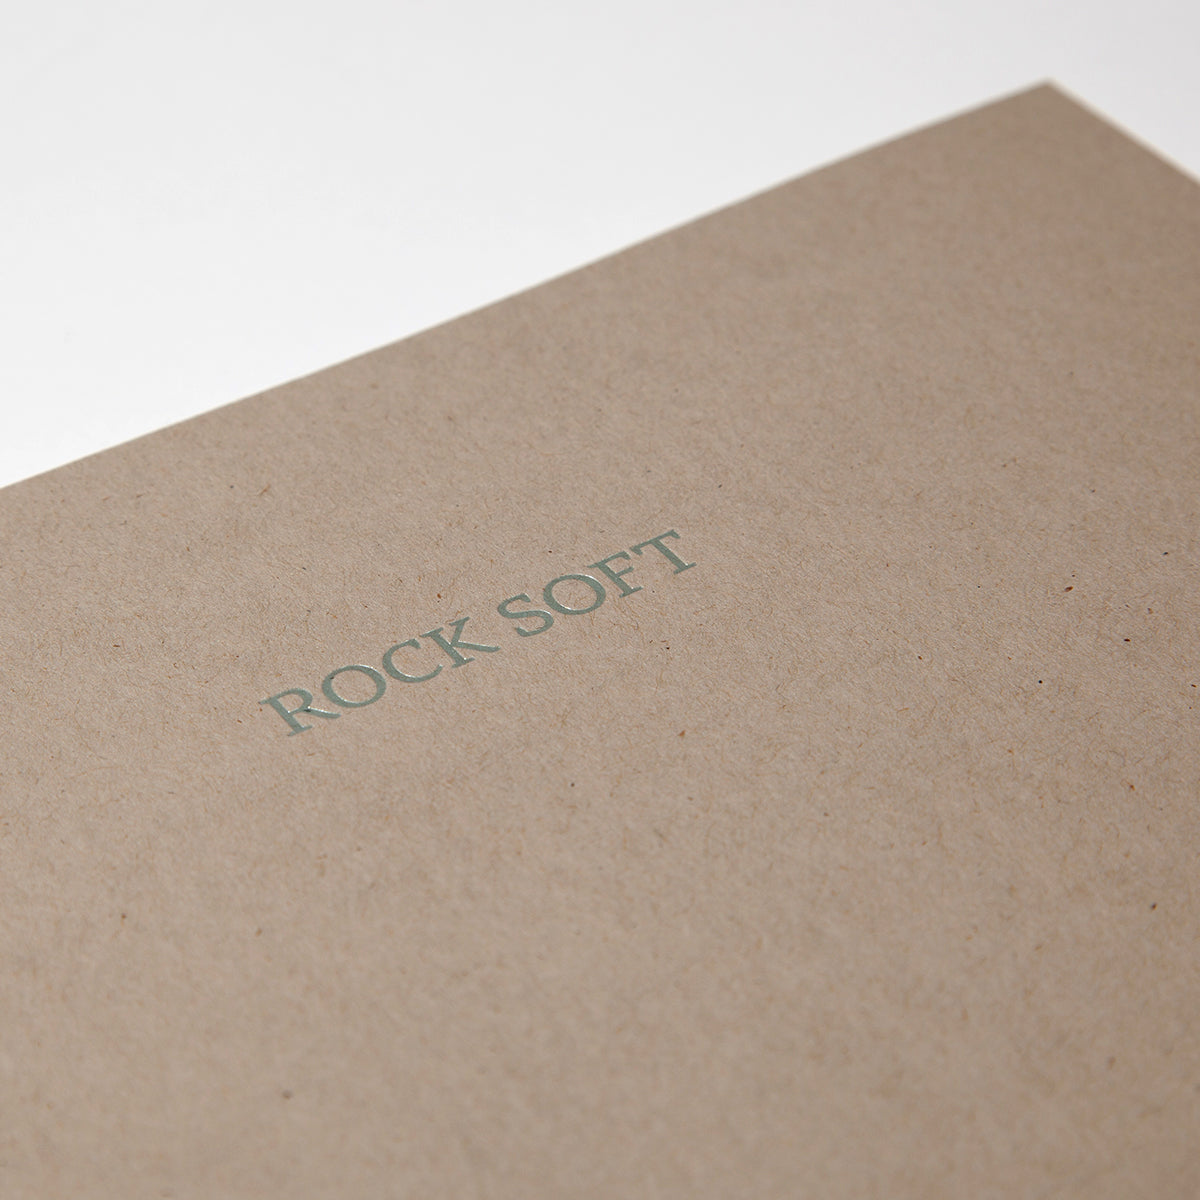 Rock Soft, Joseph Barret